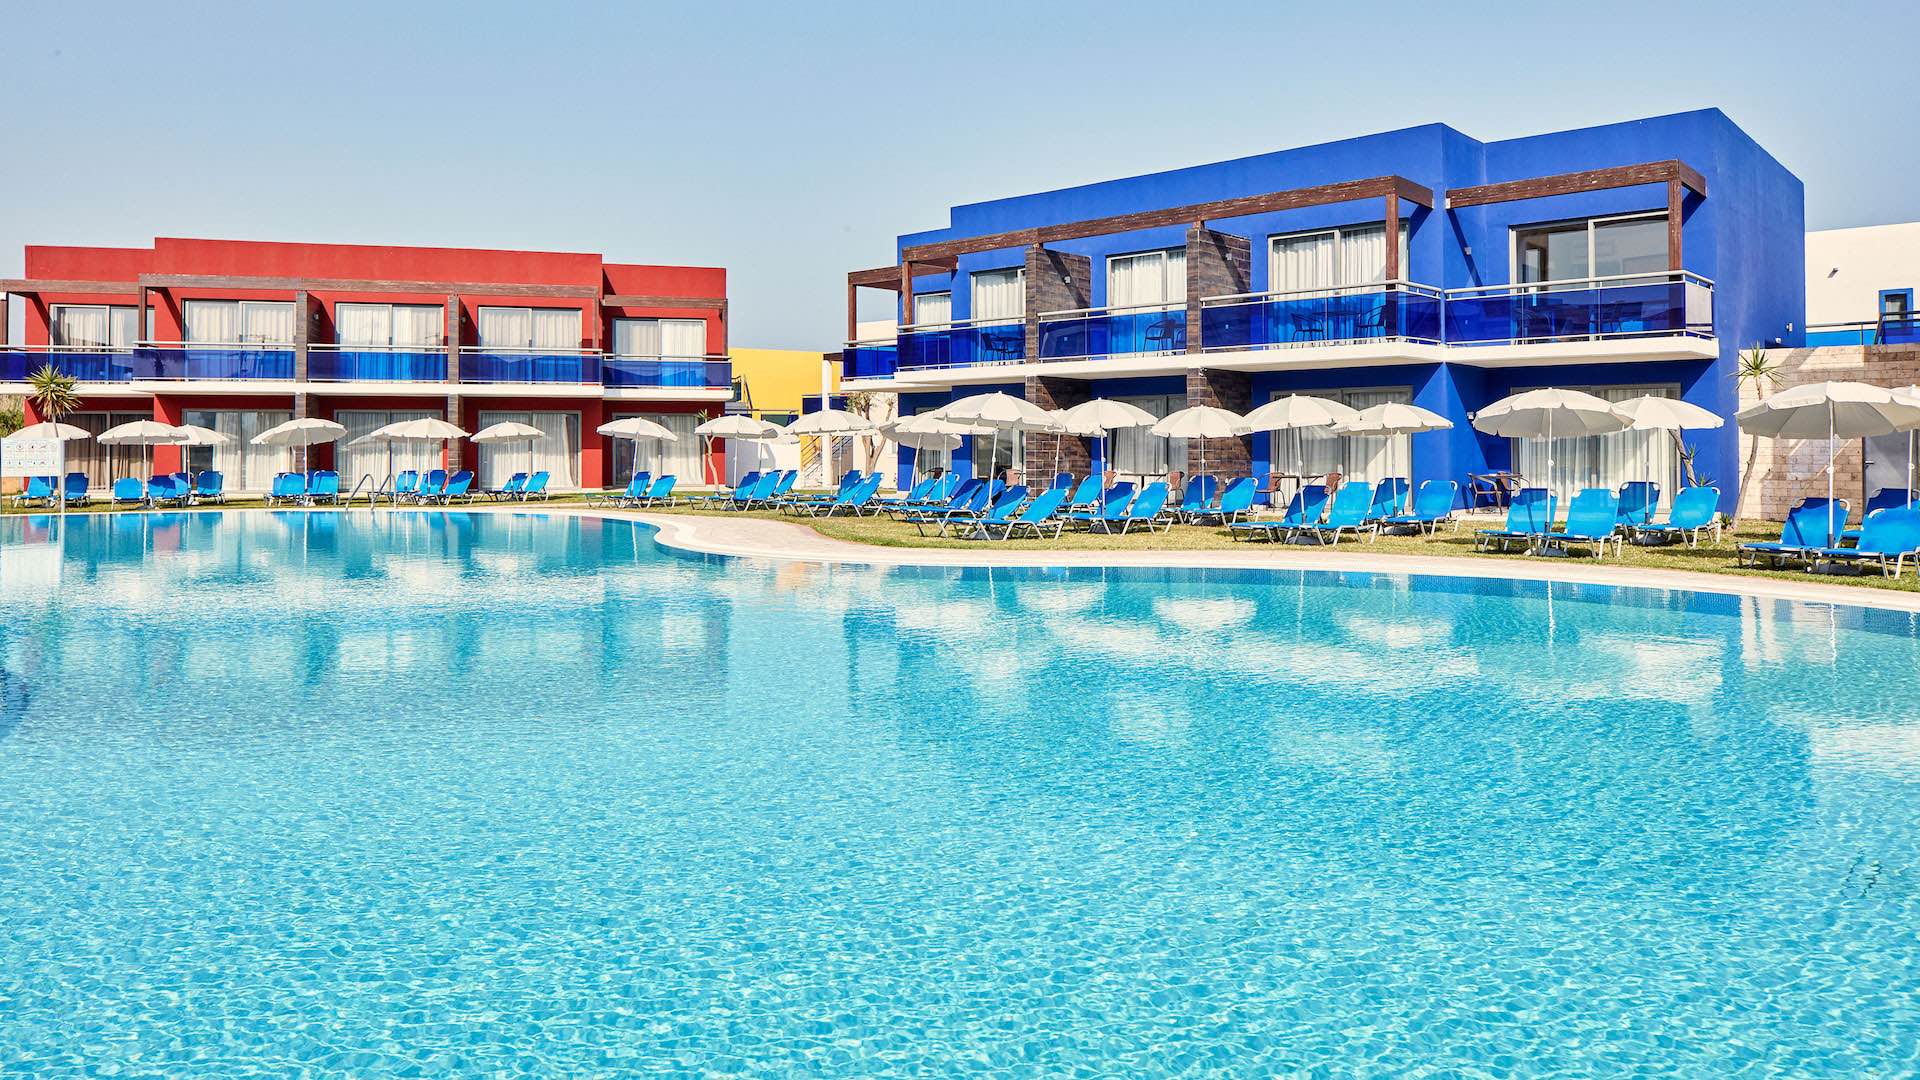 5* All Senses Nautica Blue Exclusive Resort & Spa - Φάνες, Ρόδος ✦ 2 Ημέρες (1 Διανυκτέρευση) ✦ 2 άτομα + 1 παιδί έως 13ετών ✦ 12 ✦ 09/04/2022 έως 30/09/2022 ✦ Μπροστά Στην Παραλία!